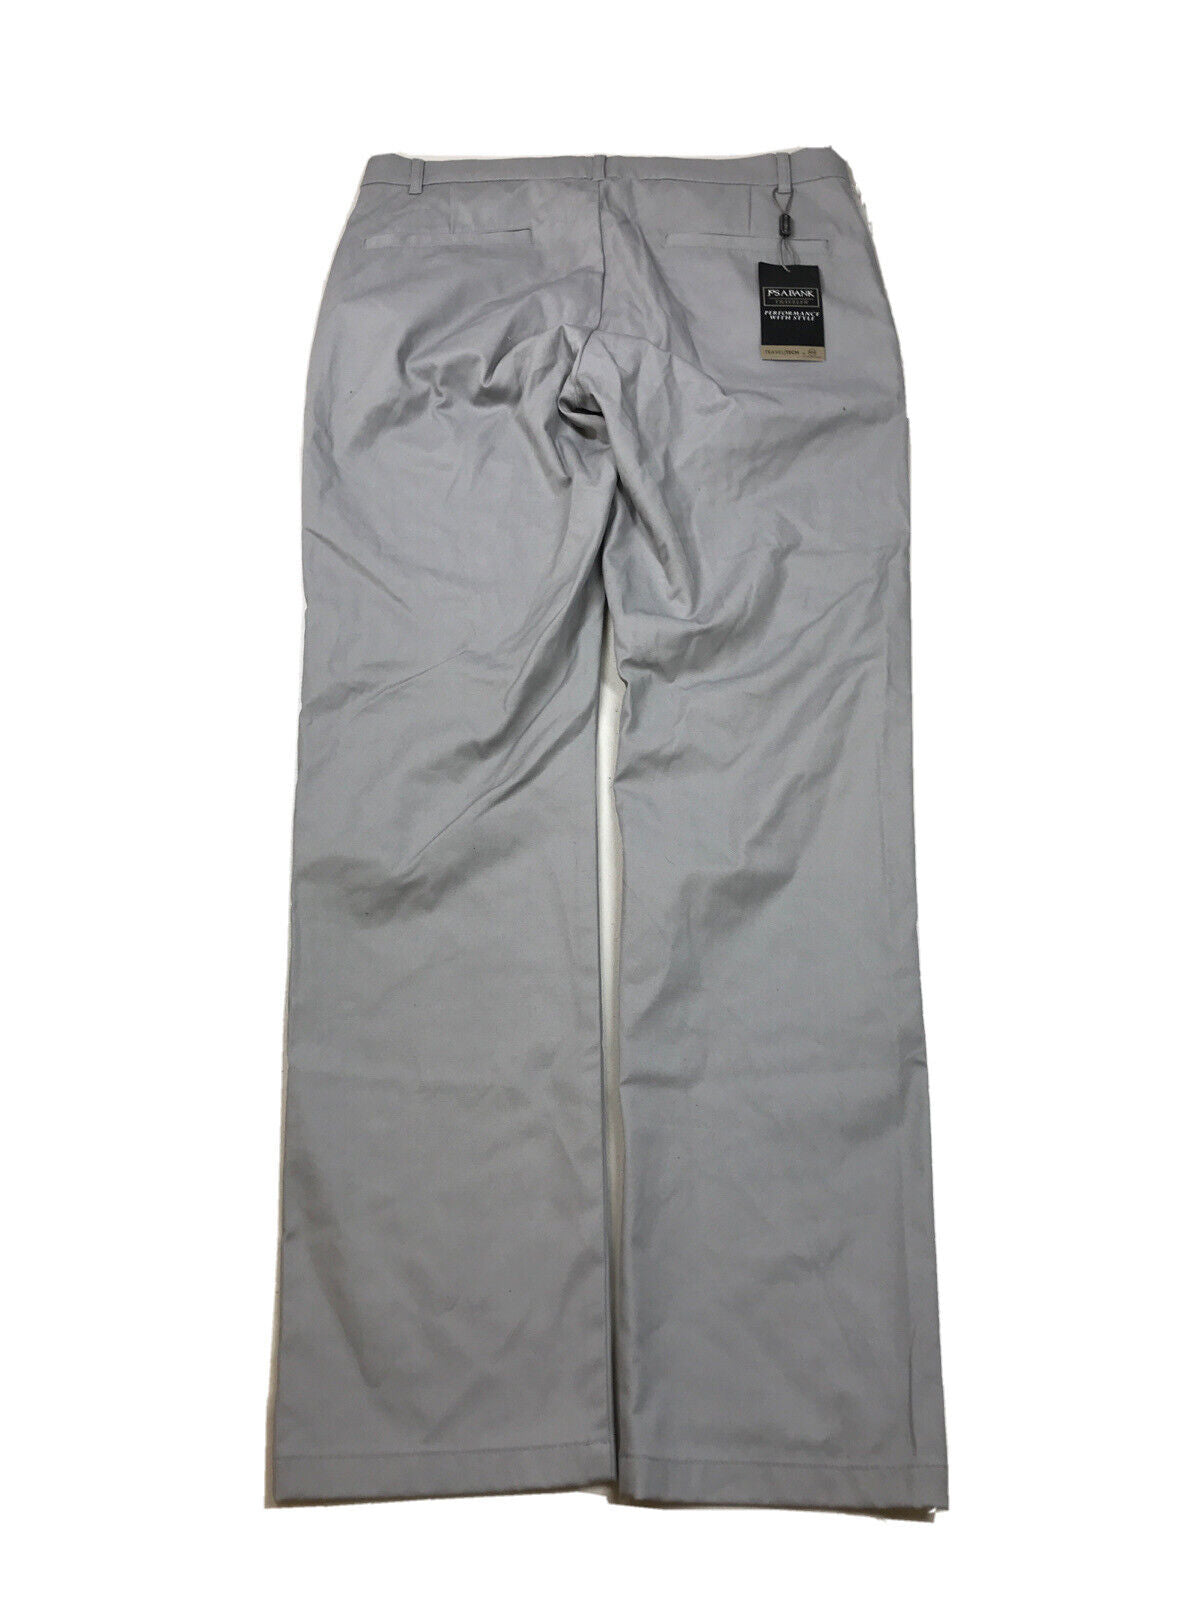 NEW Jos A Bank Men's Gray Traveler Tech Slim Fit Pants - 33X32